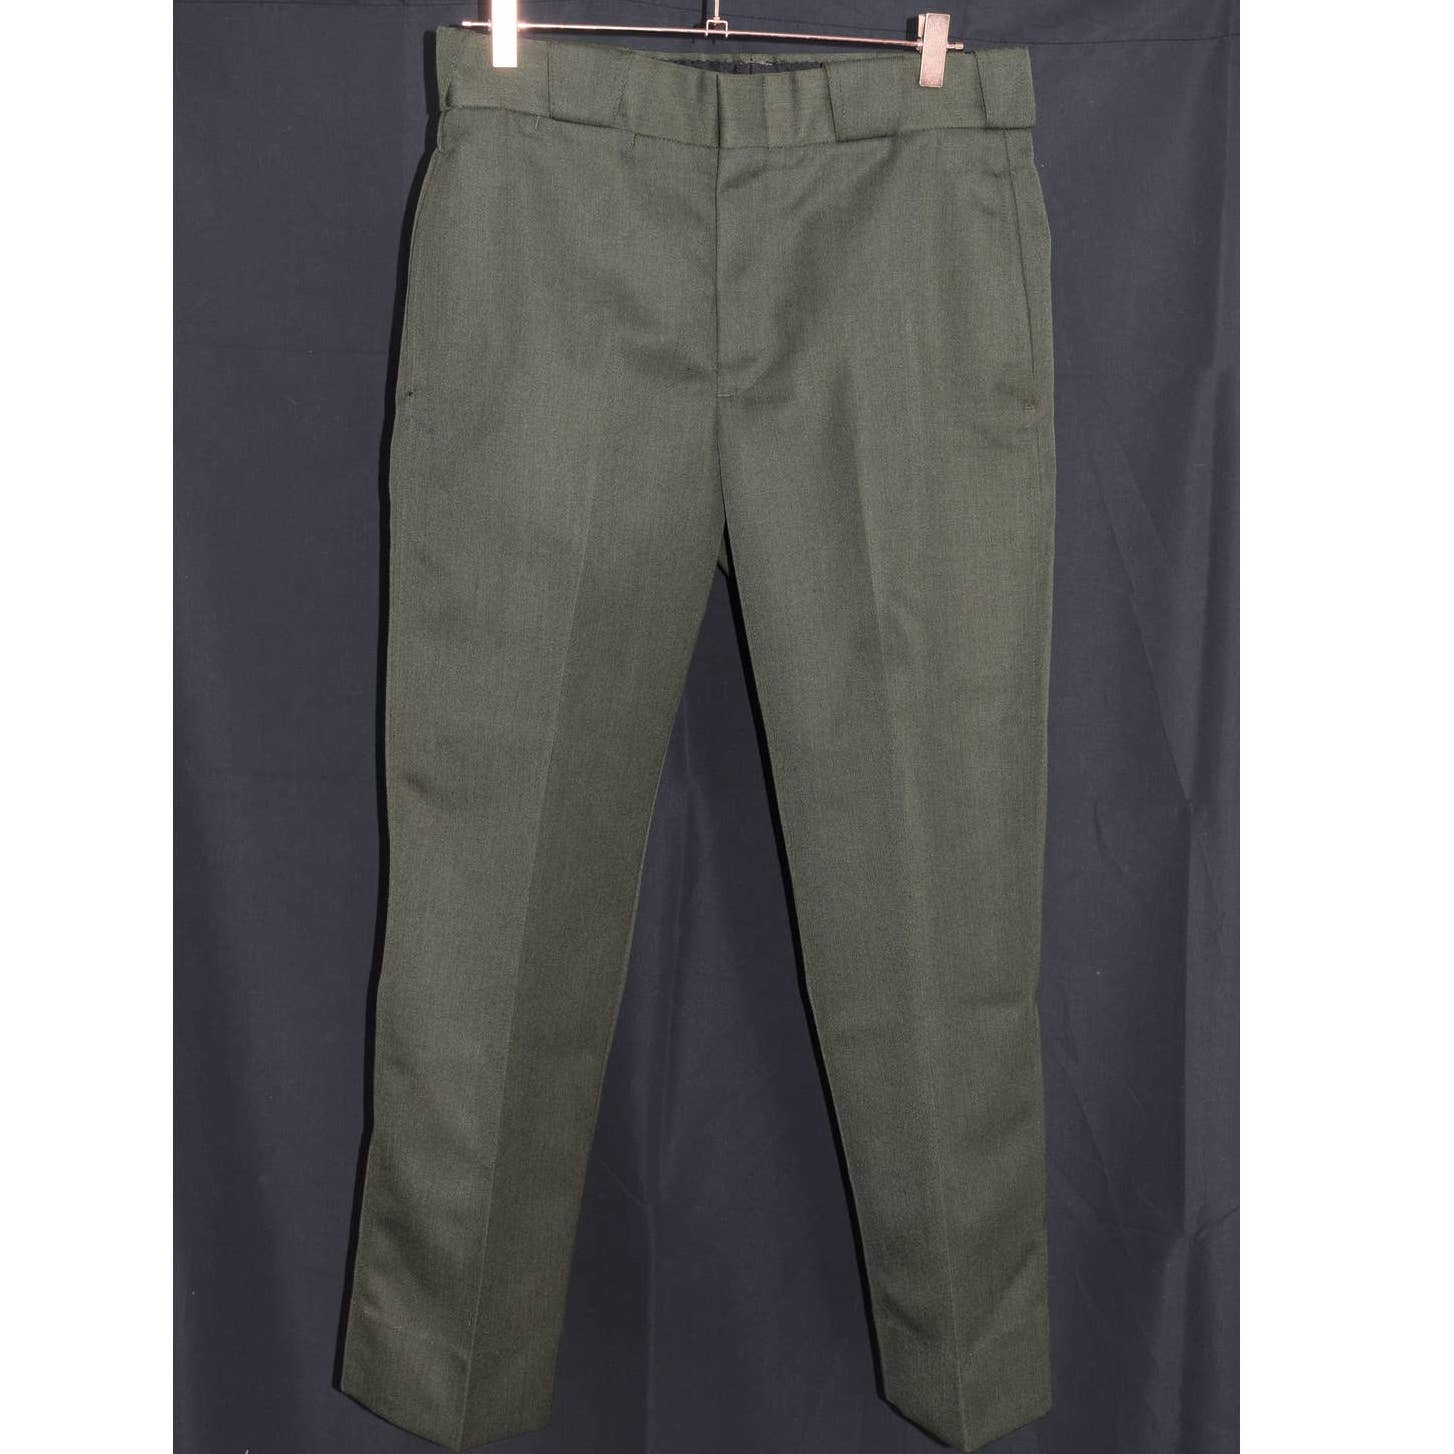 Flying Cross by Fechheimer Green Tactical Military Sheriffs Uniform Pants - 32 R